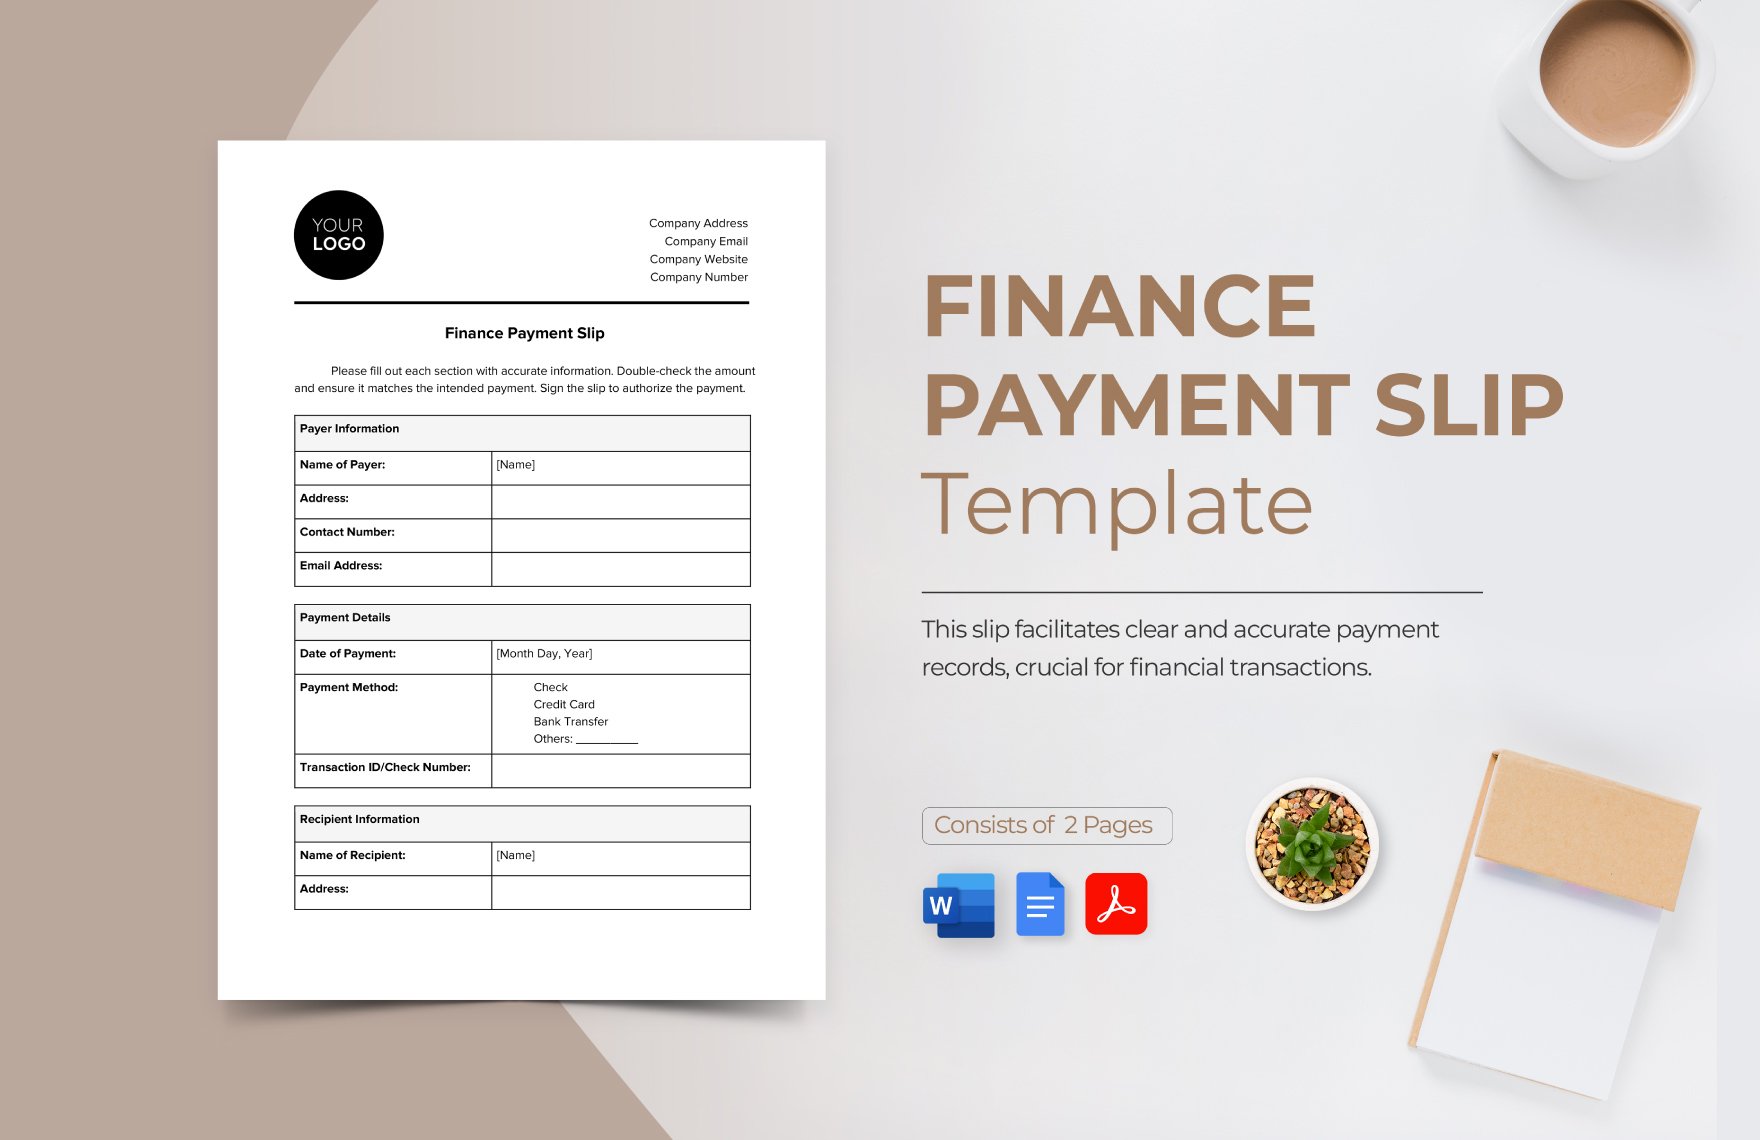 Finance Payment Slip Template